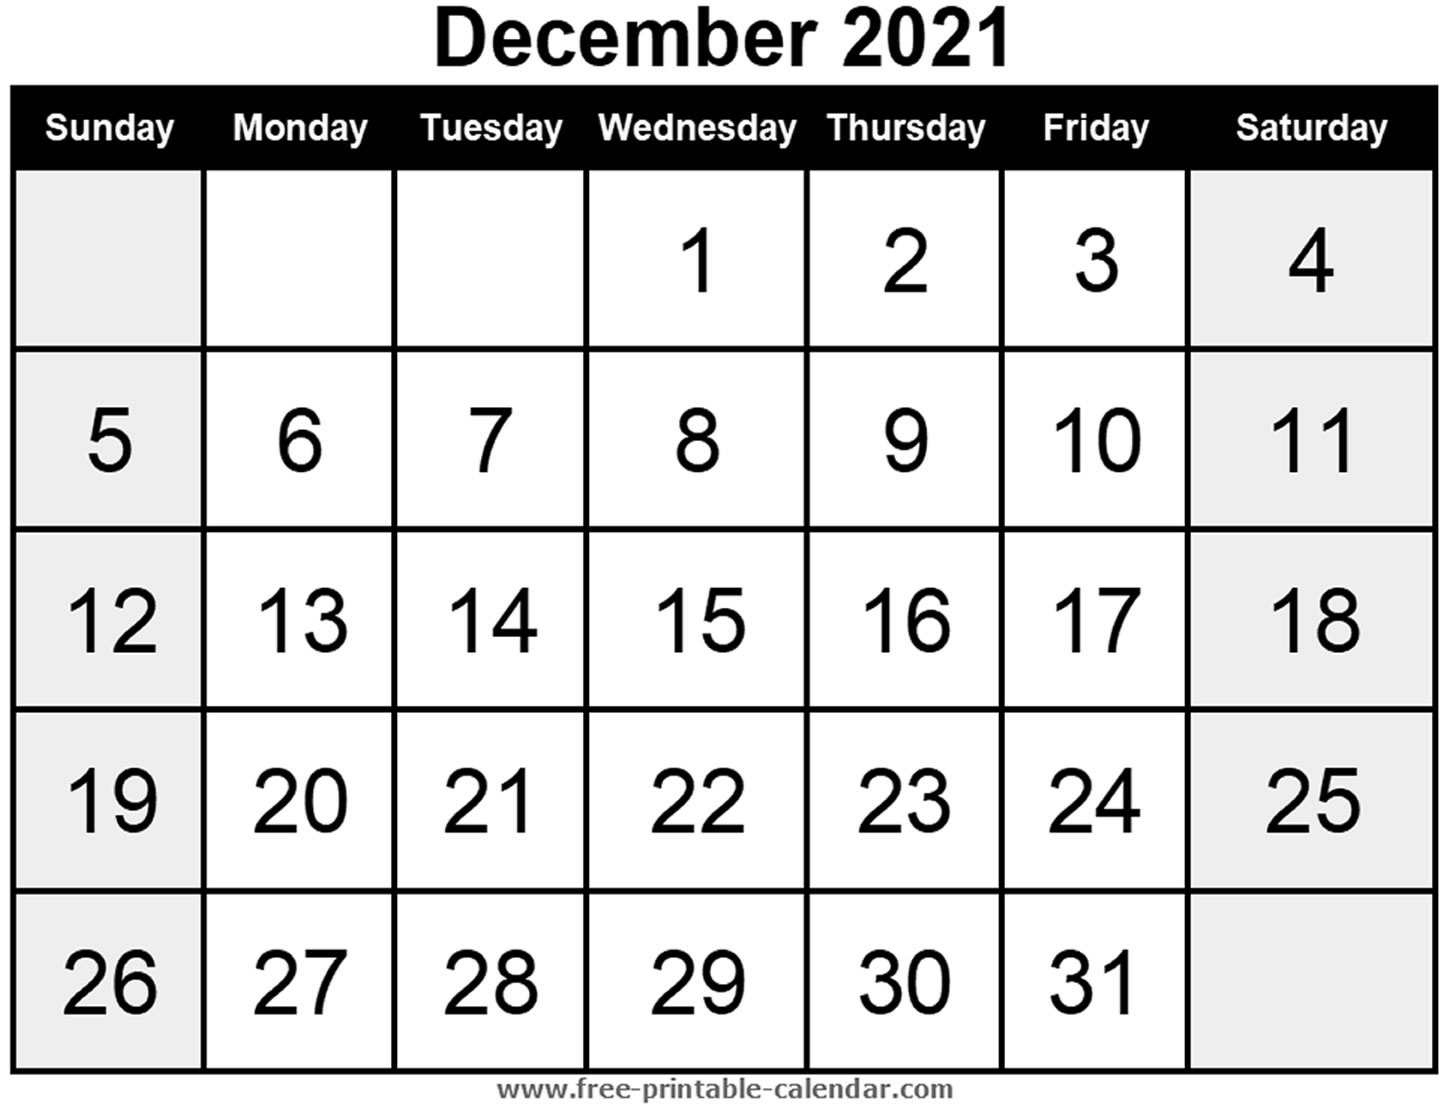 Blank Calendar December 2021 - Free-Printable-Calendar Calendar Of December 2021